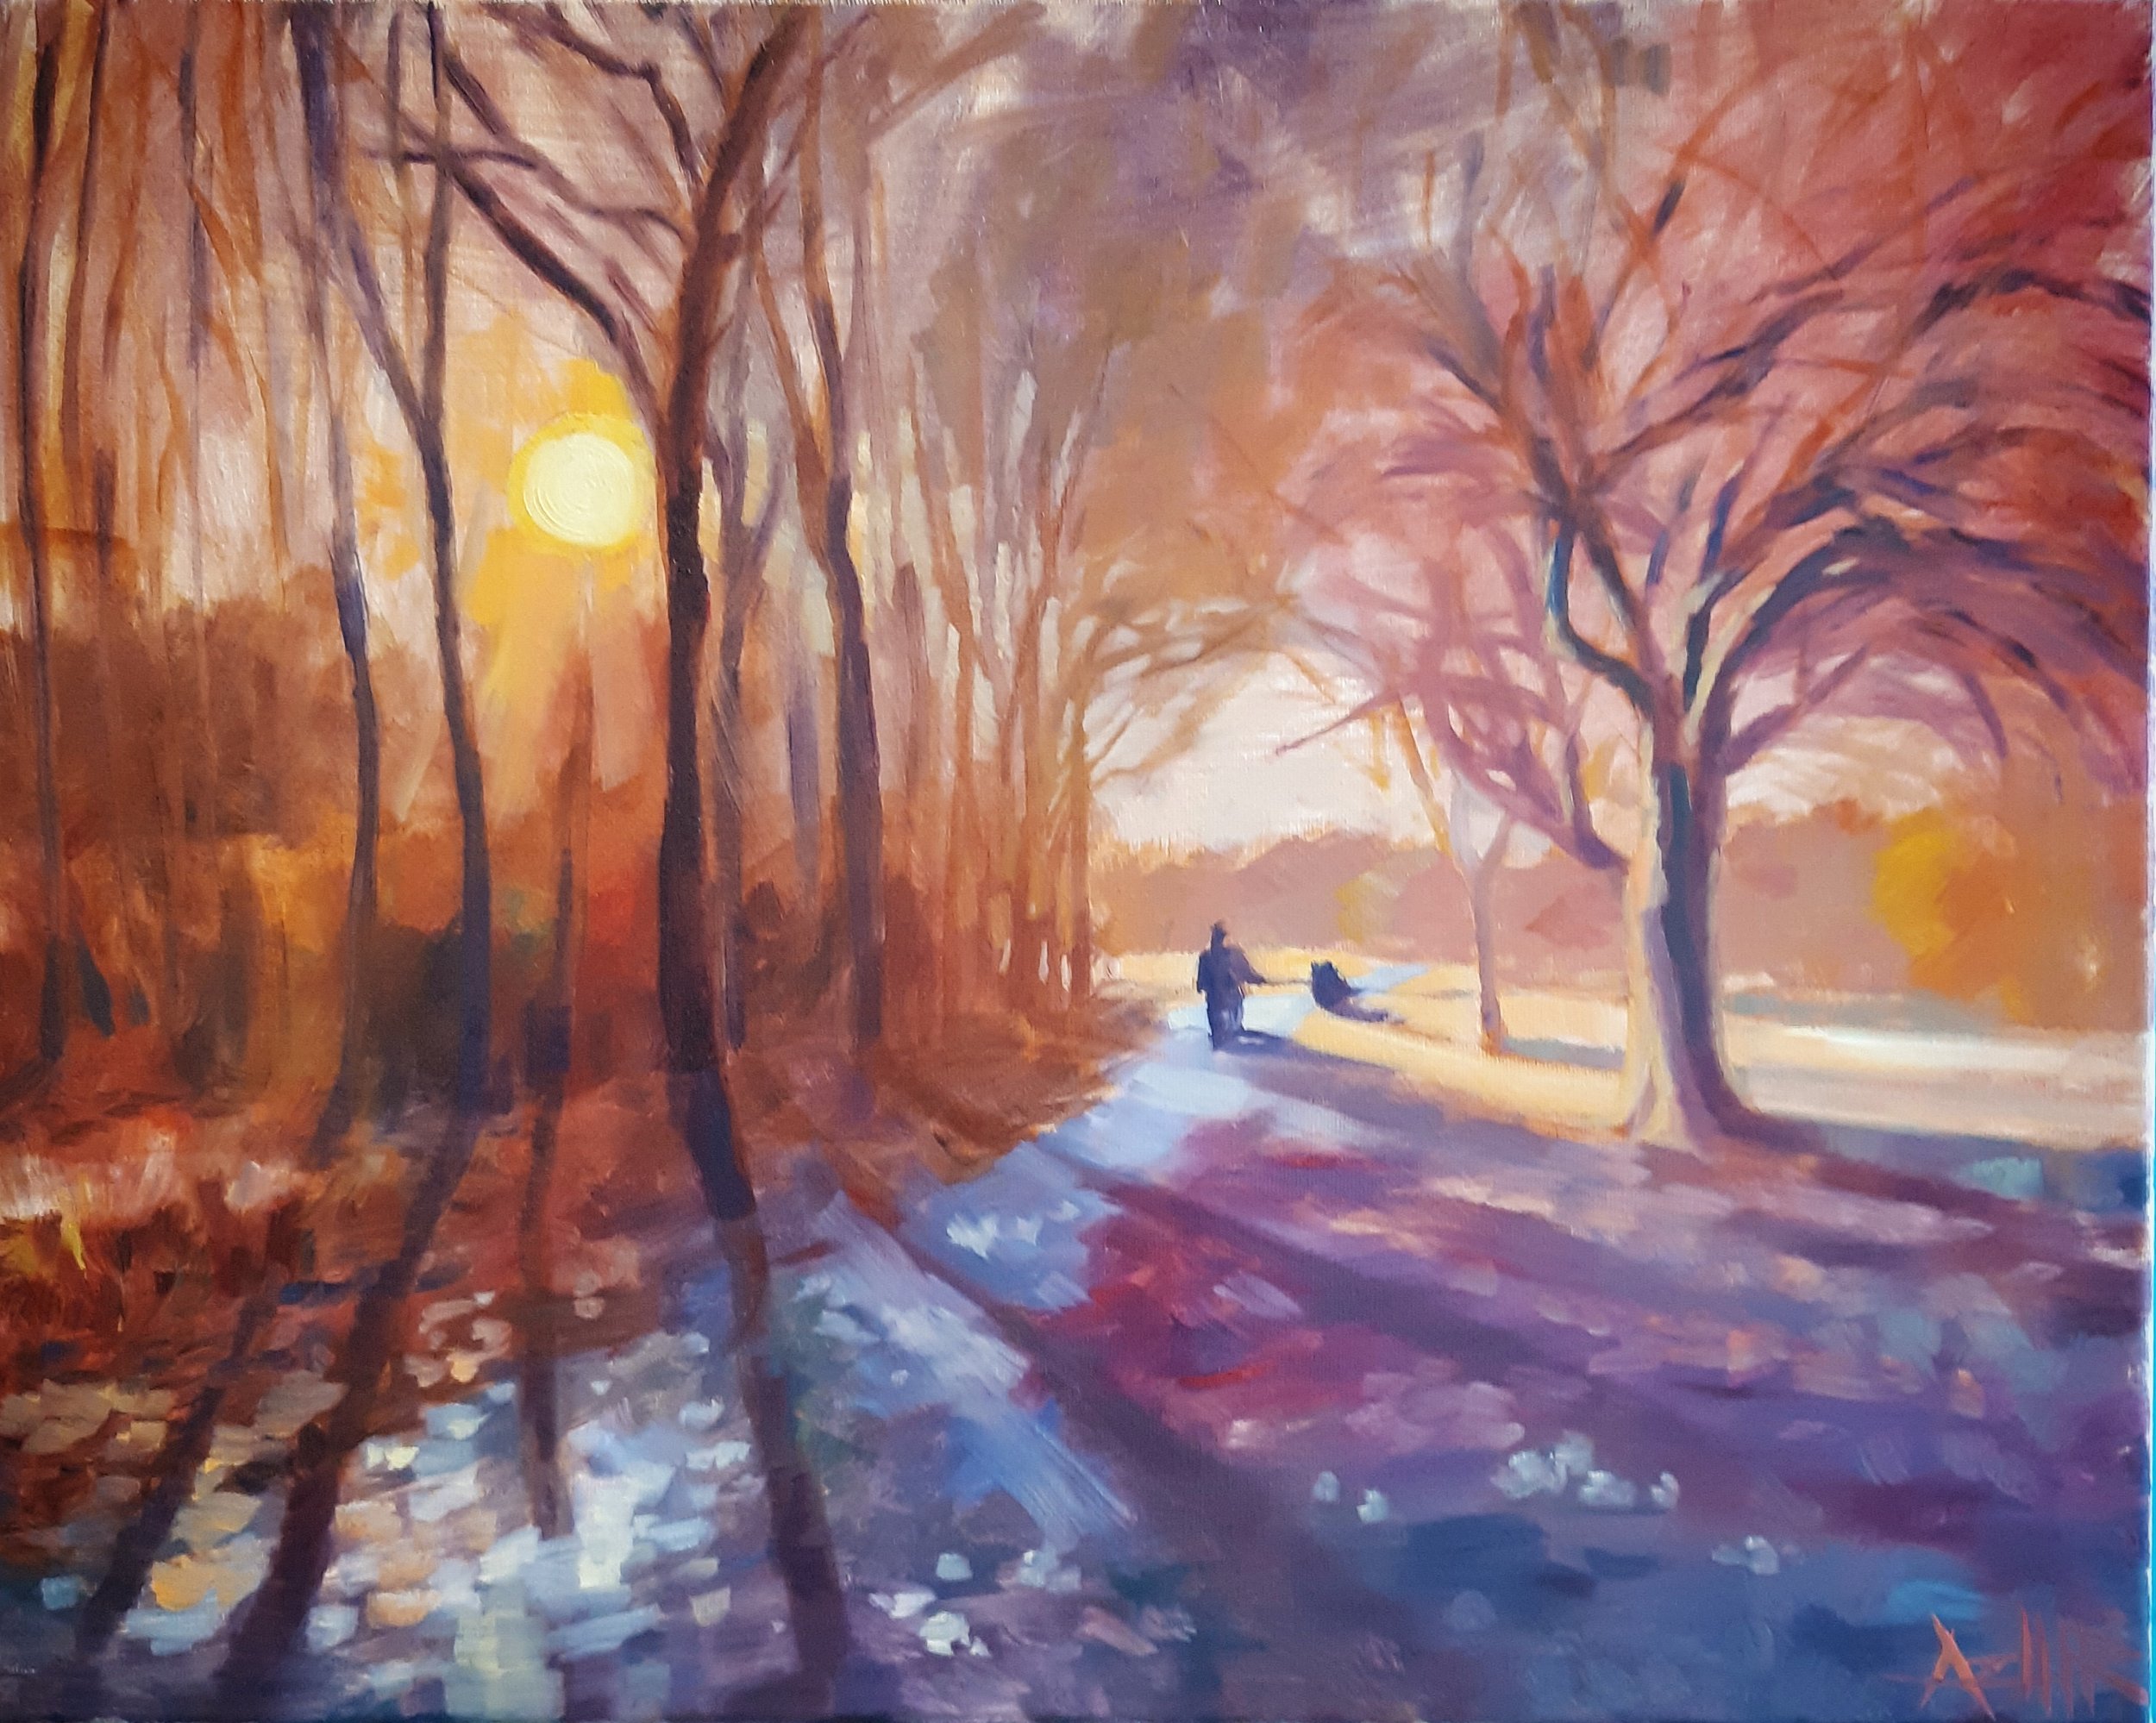 SOLD, Walk at Sunset Painting, Oil on Canvas, Copyright 2018 Hirschten